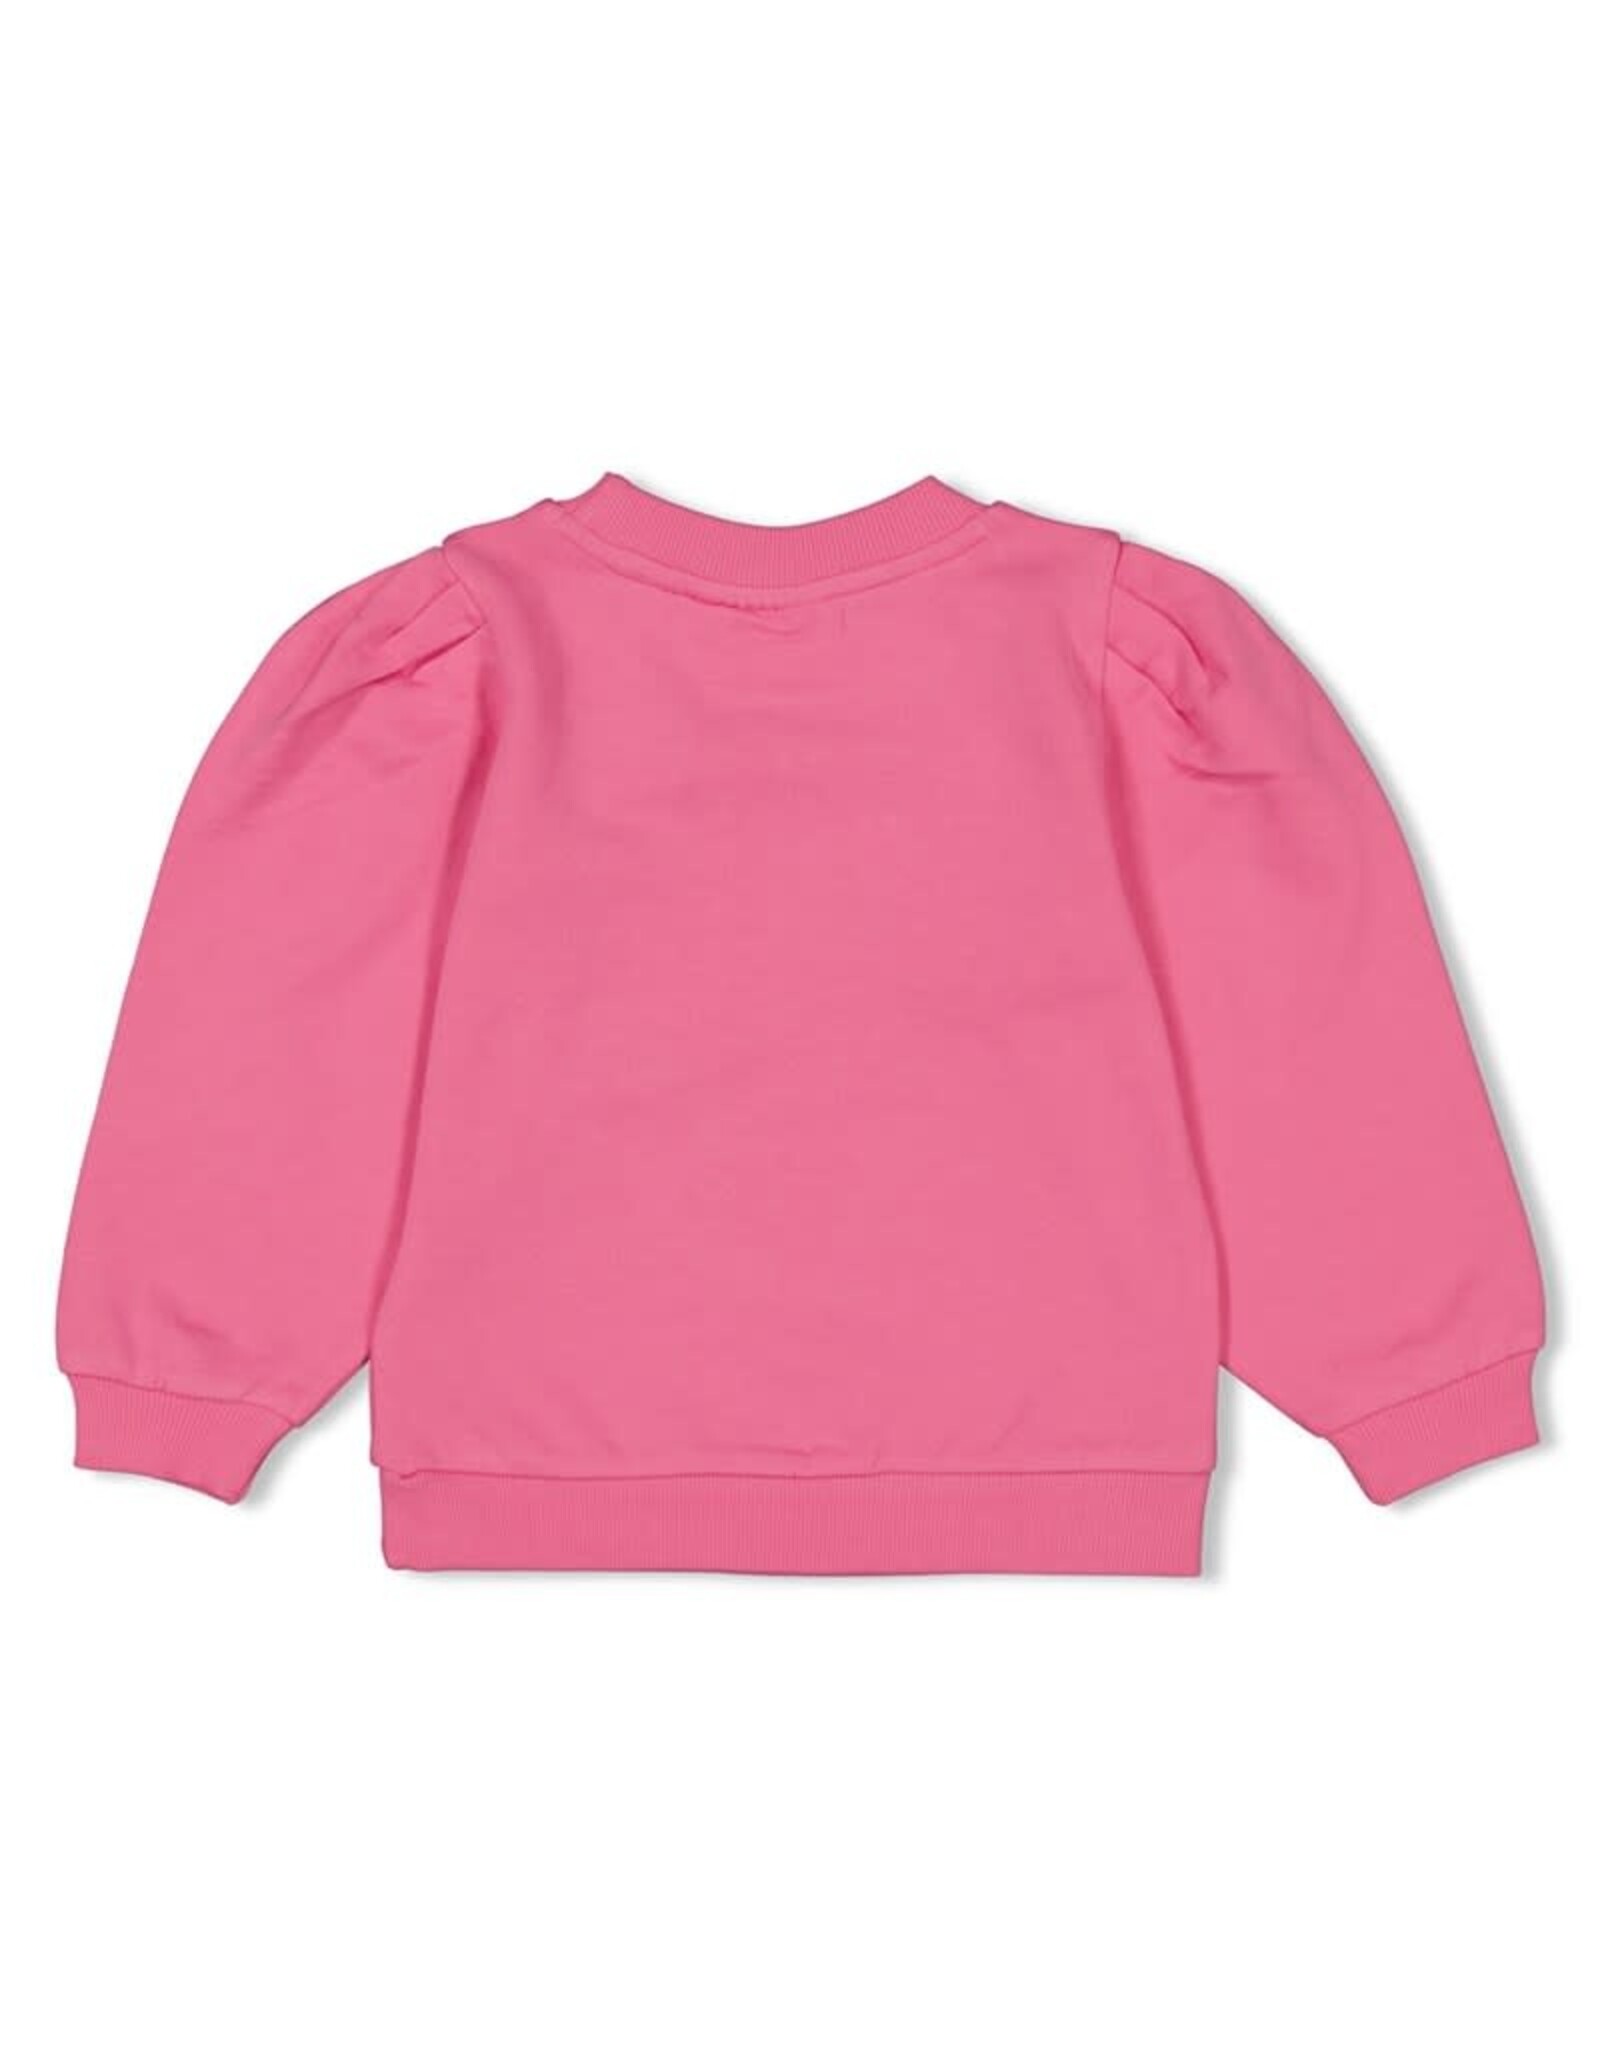 Jubel Sweater - Berry Nice Roze